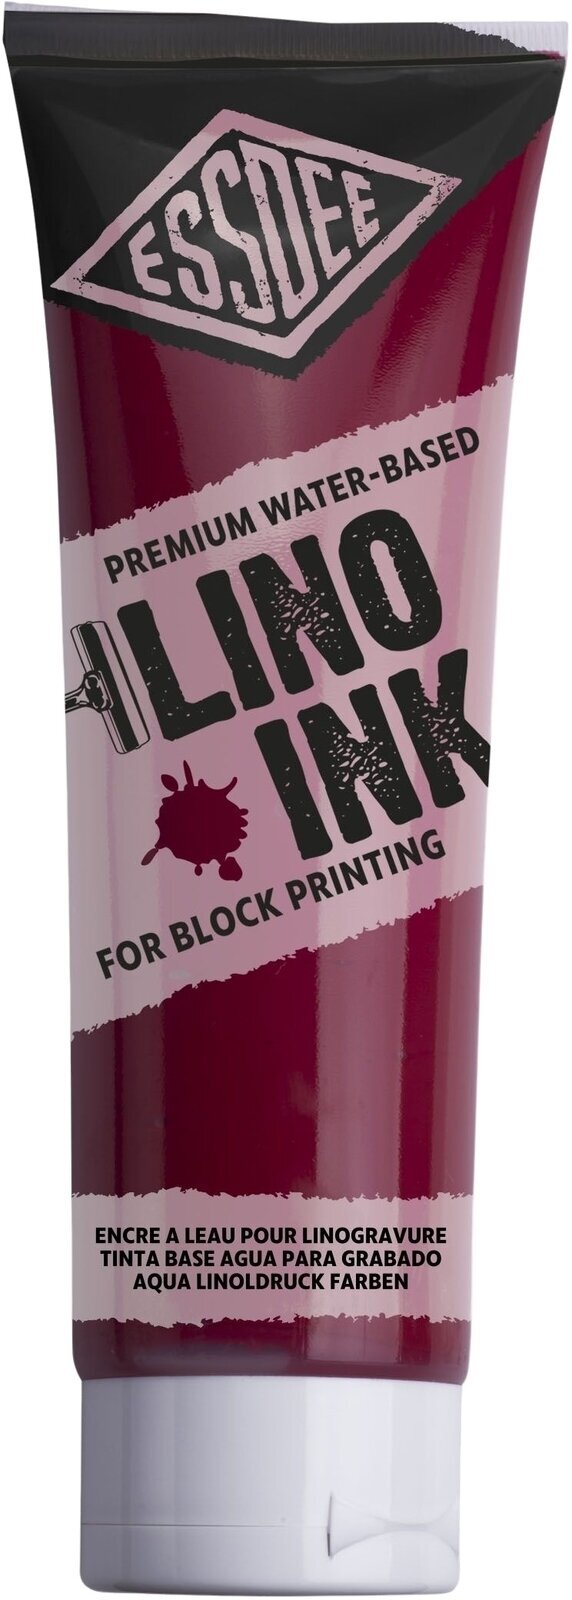 Vernice per linoleografia Essdee Block Printing Ink Vernice per linoleografia Crimson 300 ml